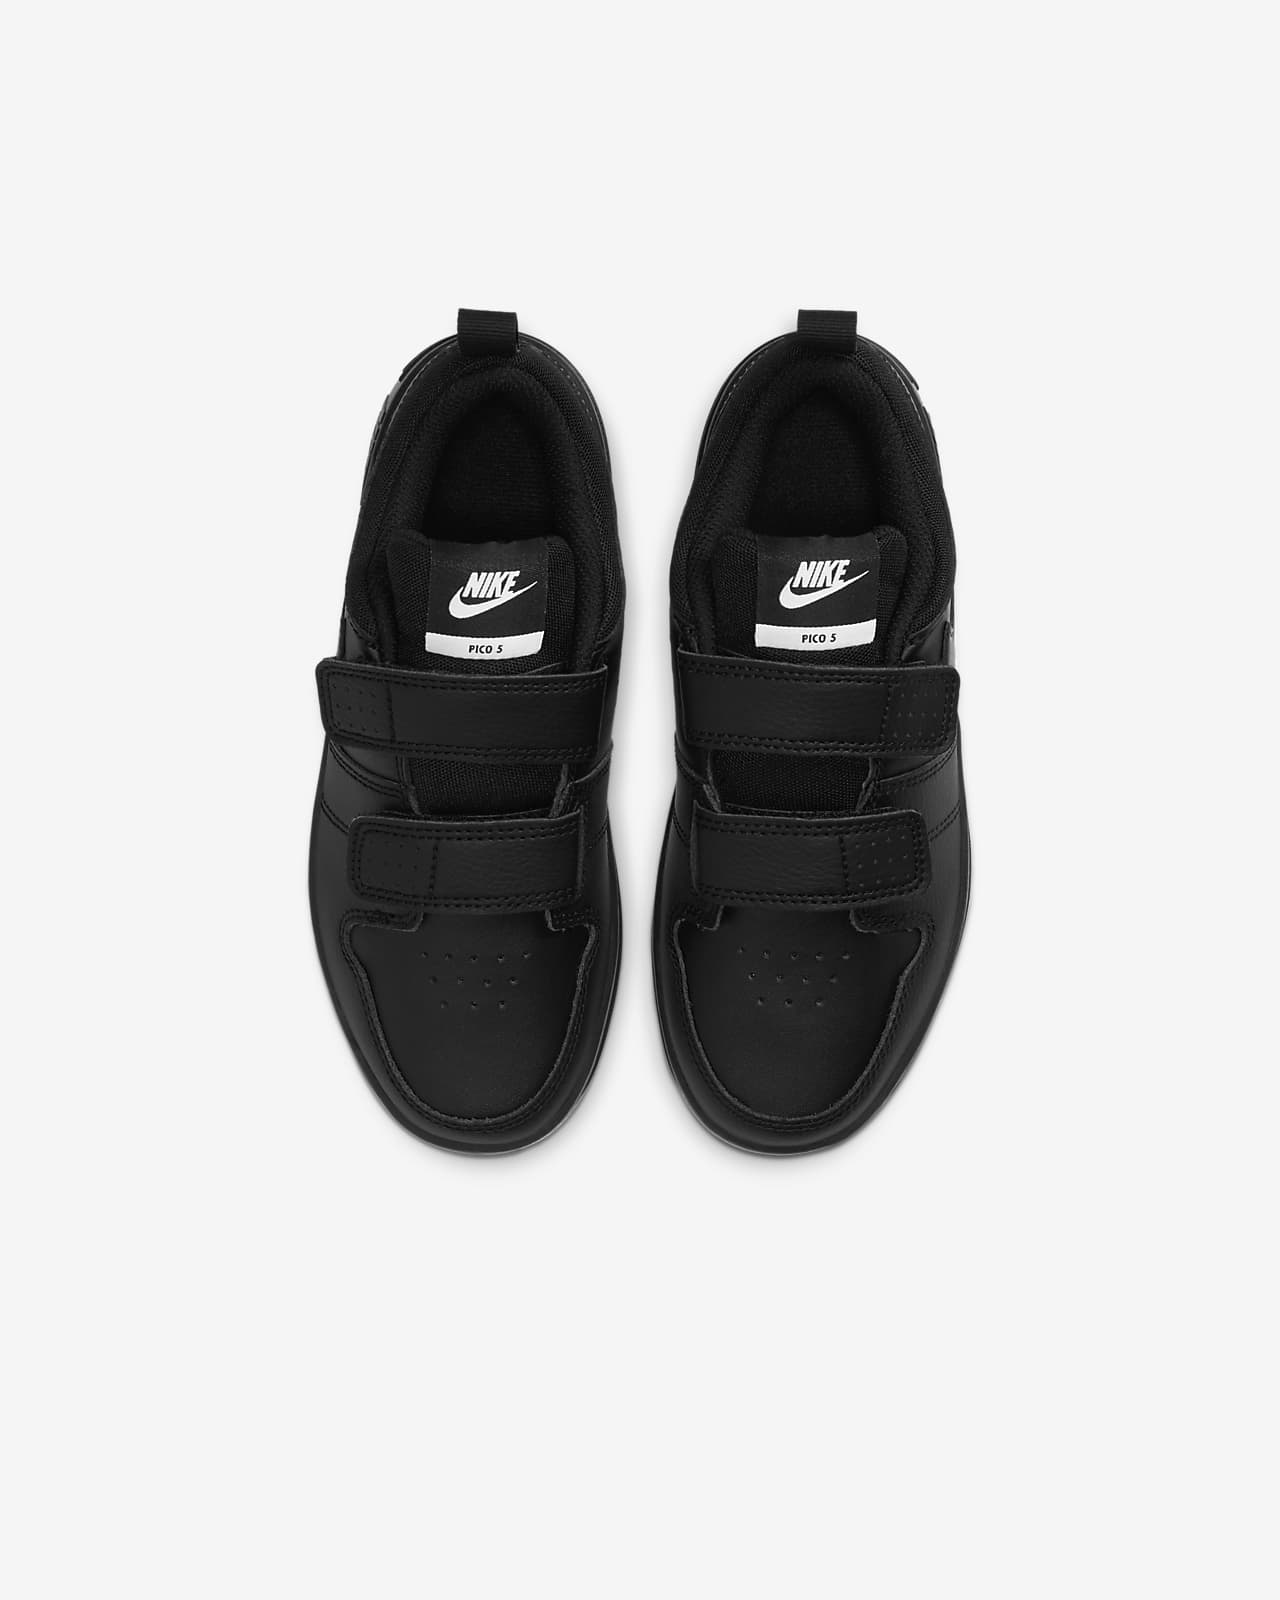 Кроссовки для дошкольников Nike Pico 5 